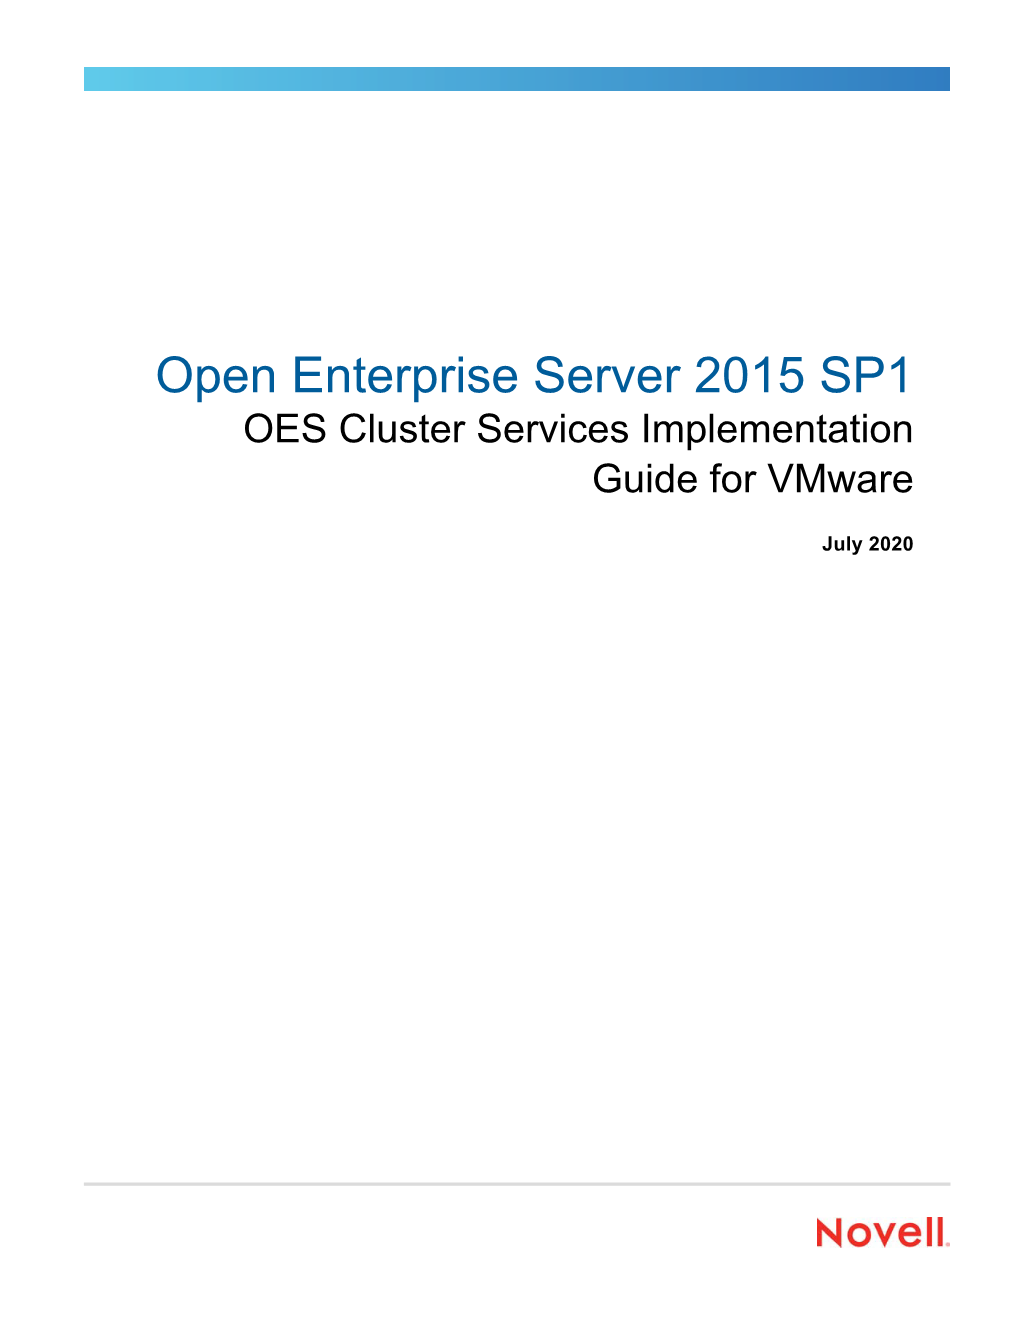 Open Enterprise Server 2015 SP1 OES Cluster Services Implementation Guide for Vmware